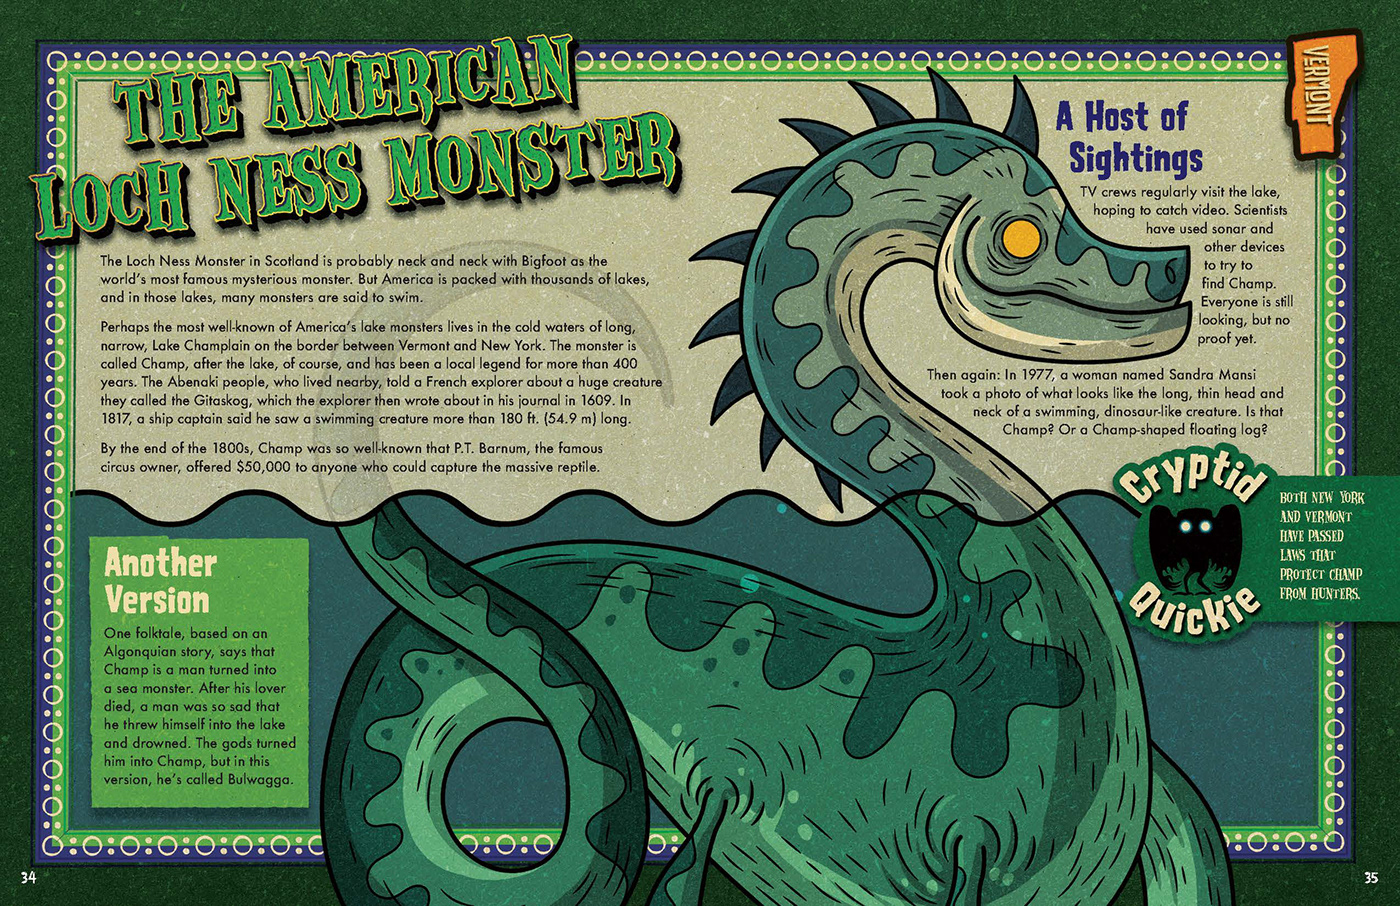 monsters united states cryptid cryptozoology Digital Art  digital illustration Character design  adobe illustrator Adobe Photoshop book illustration